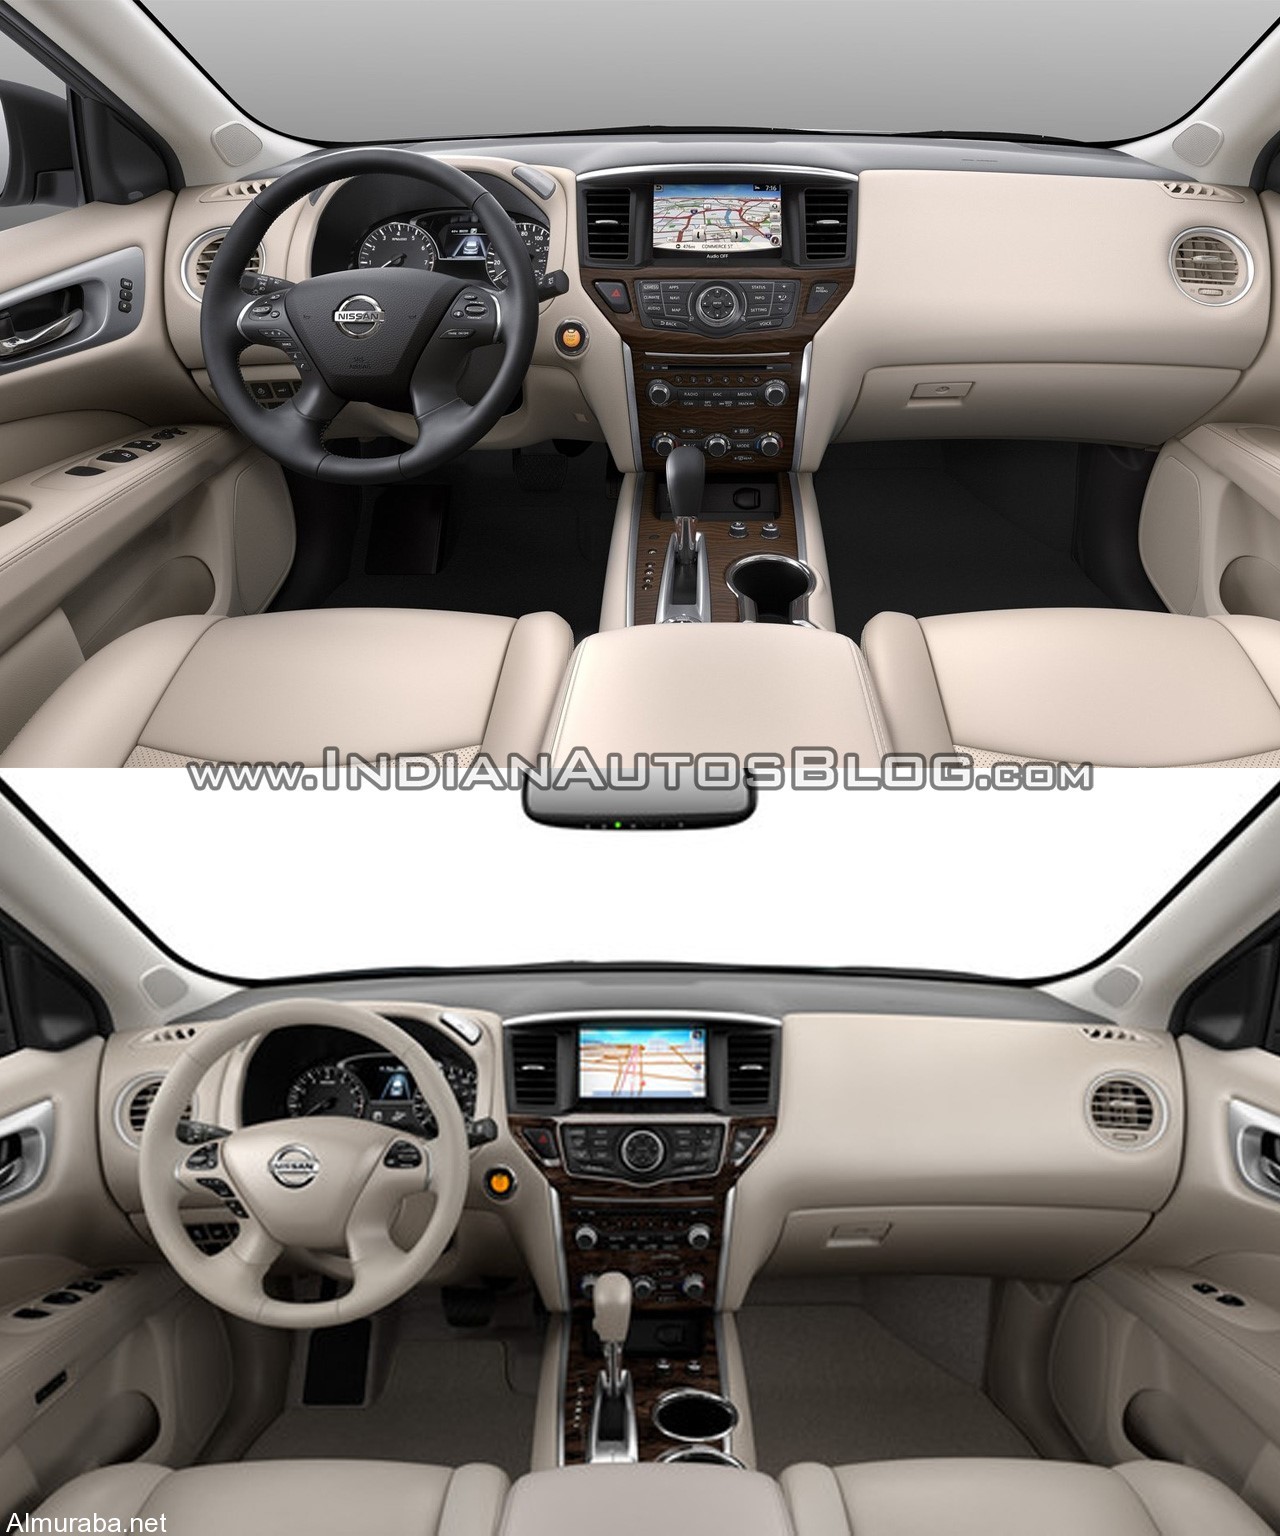 2017-Nissan-Pathfinder-facelift-vs.-2013-Nissan-Pathfinder-interior-dashboard